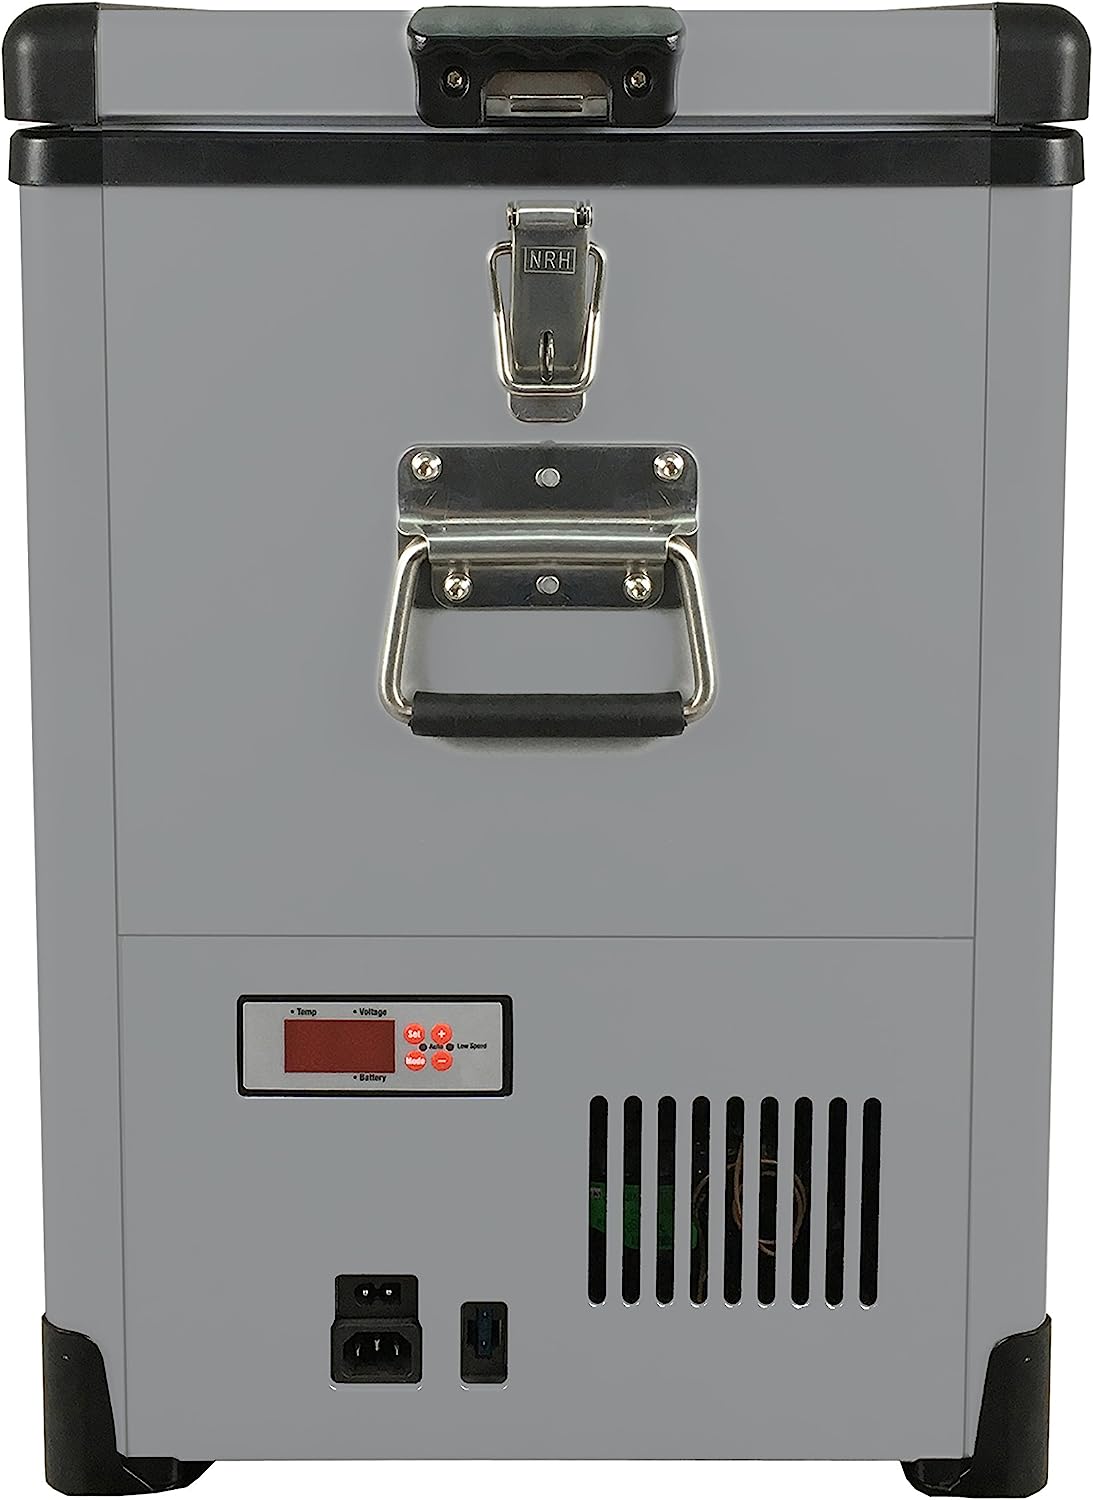 FM-452SG 45 Quart Slimfit Portable Refrigerator (*Lightly Used) - $200